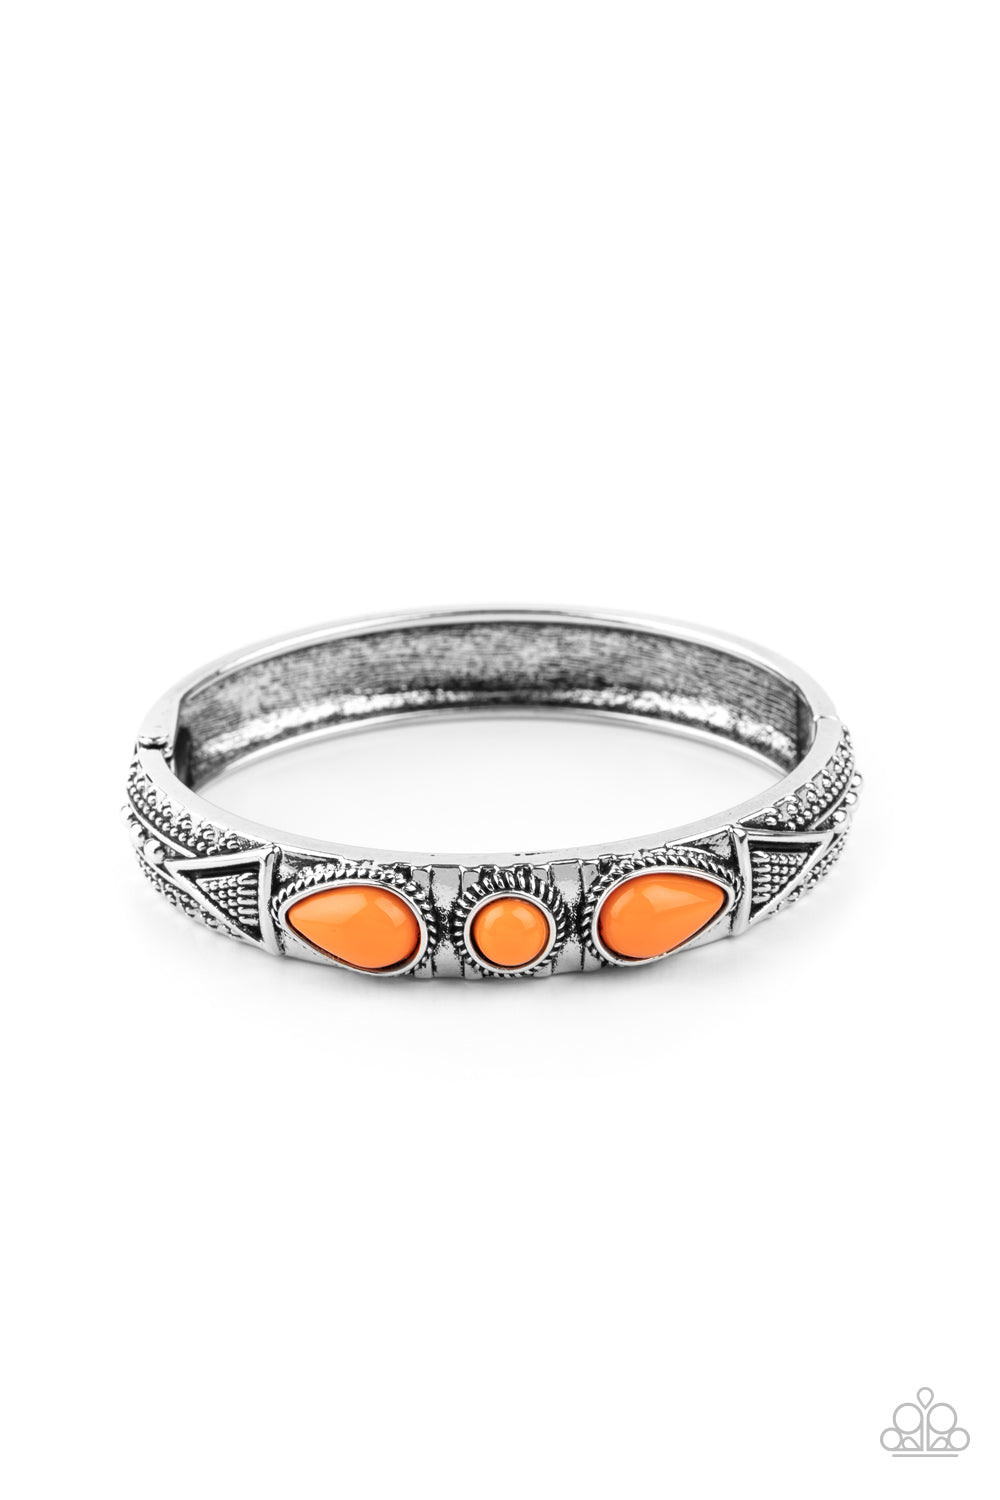 Radiant Ruins Orange Bracelet